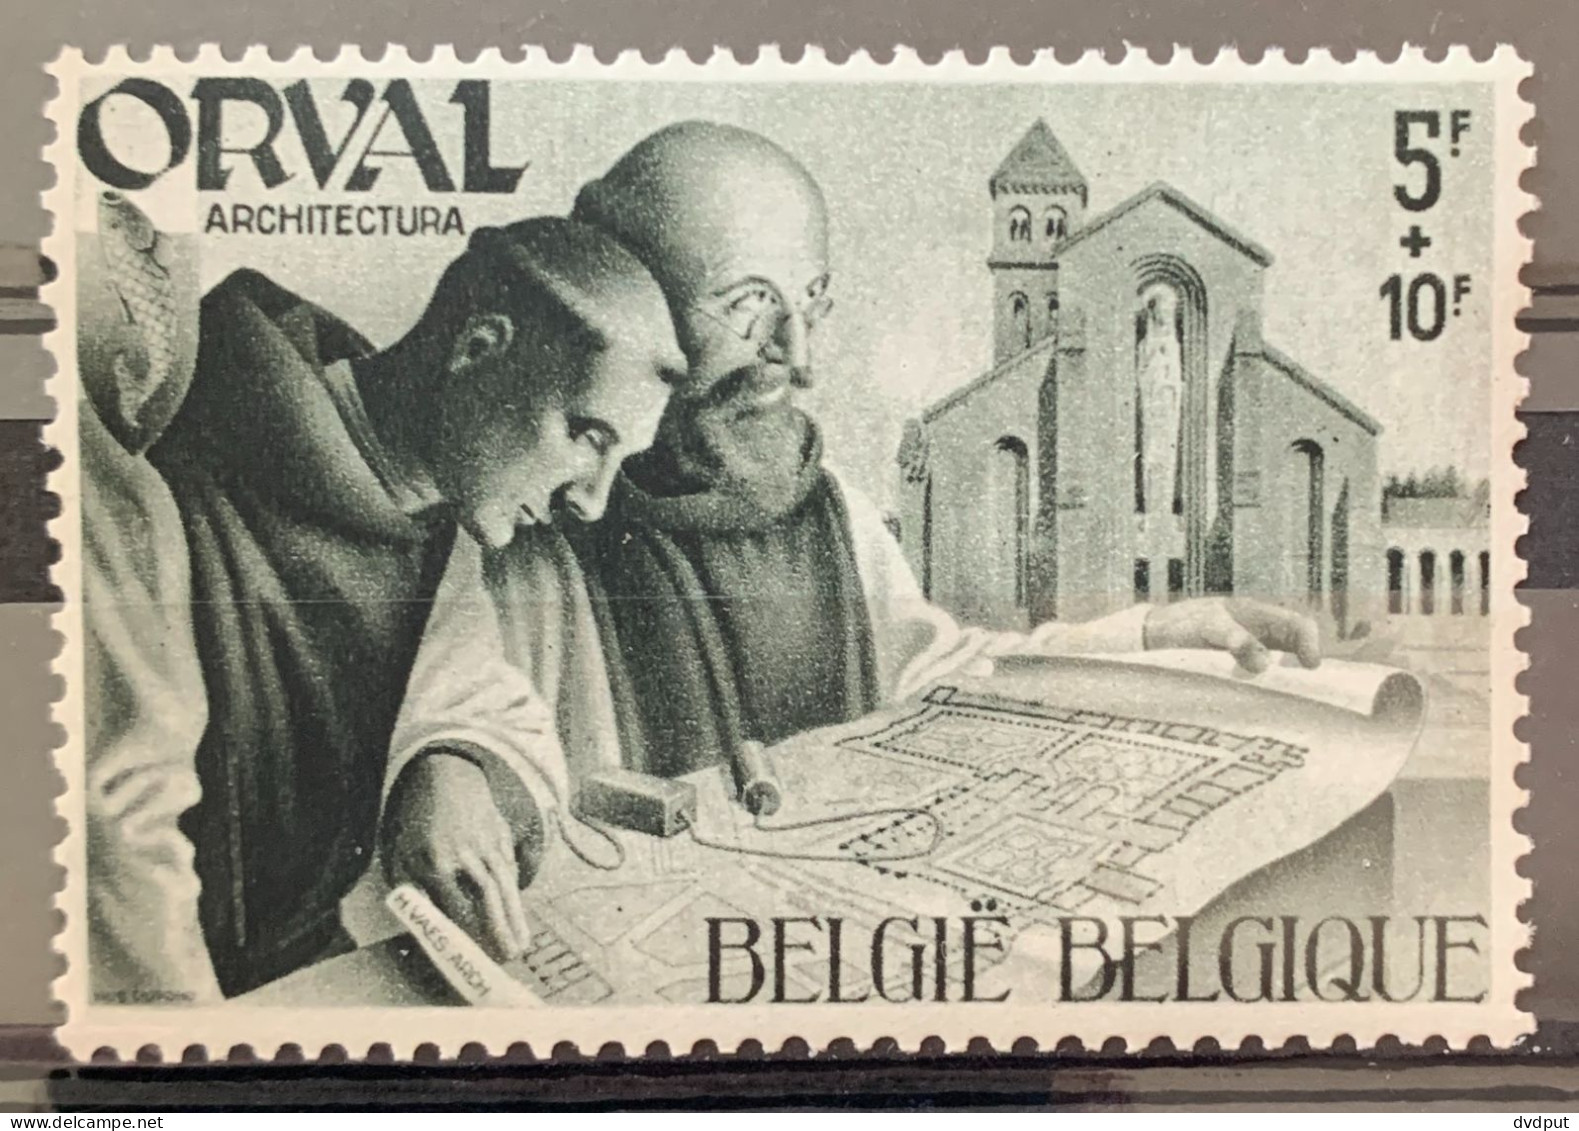 België, 1941, 567-V2, Postfris **, OBP 25€ - 1931-1960